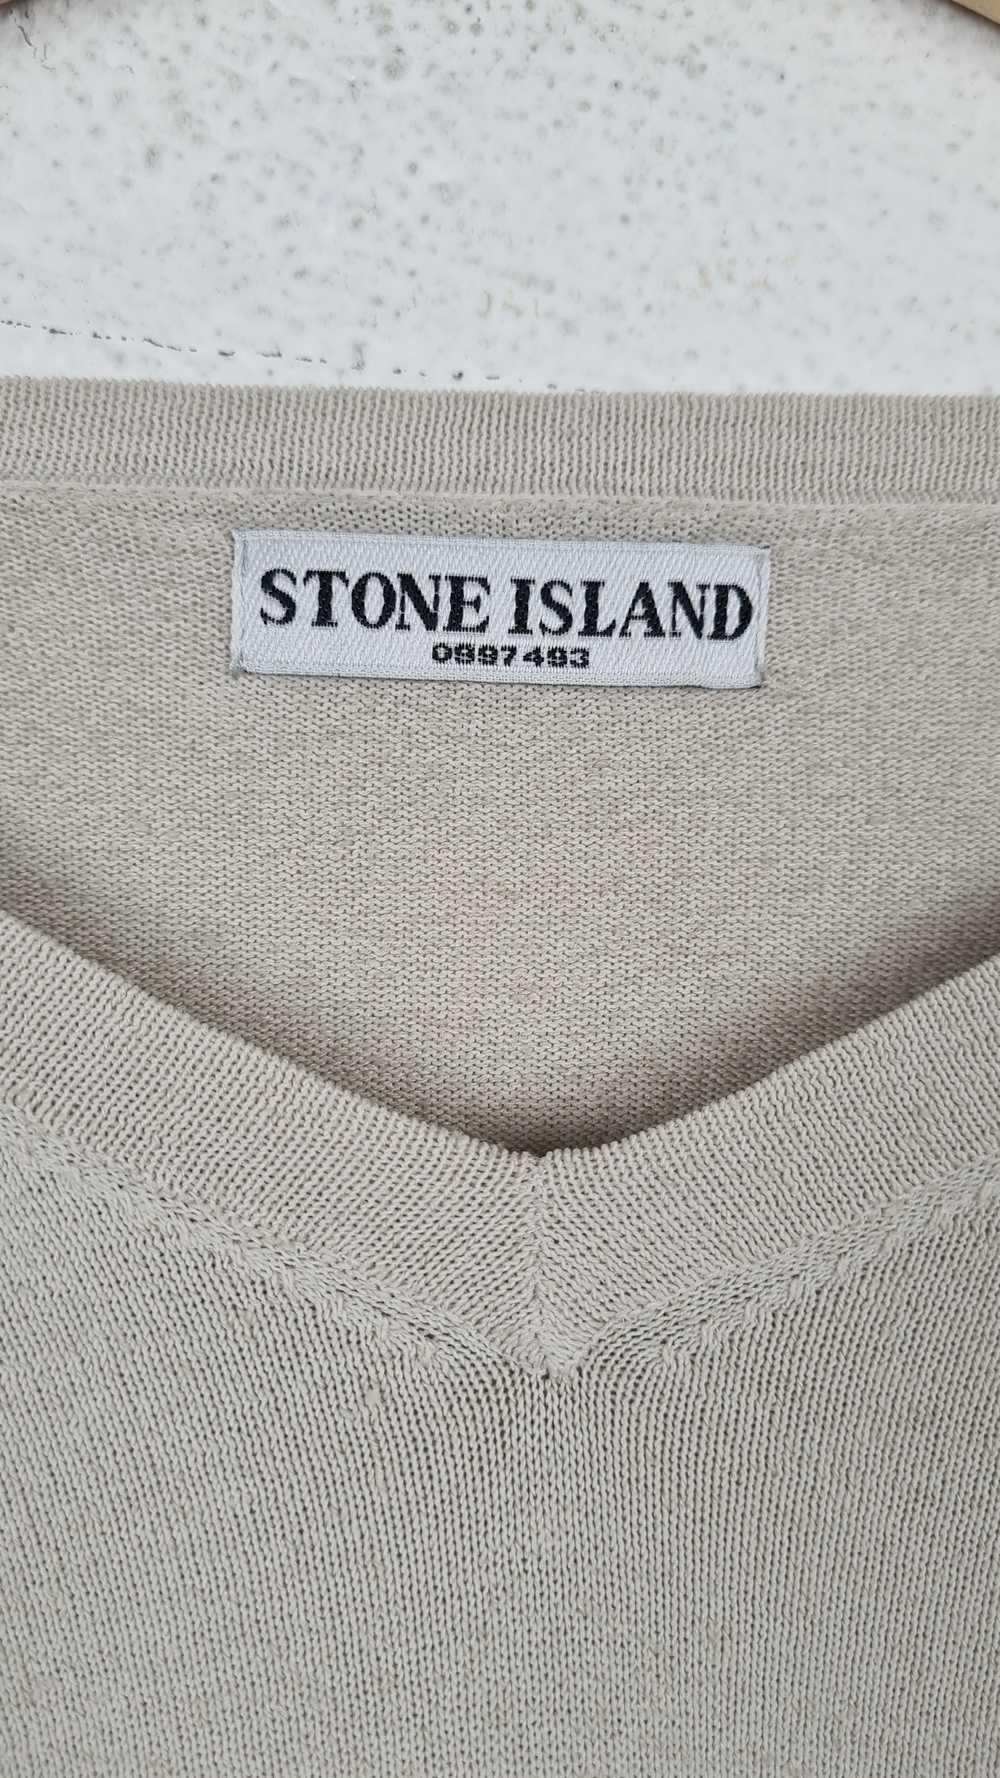 Stone Island Maglione Stone Island vintage - image 7